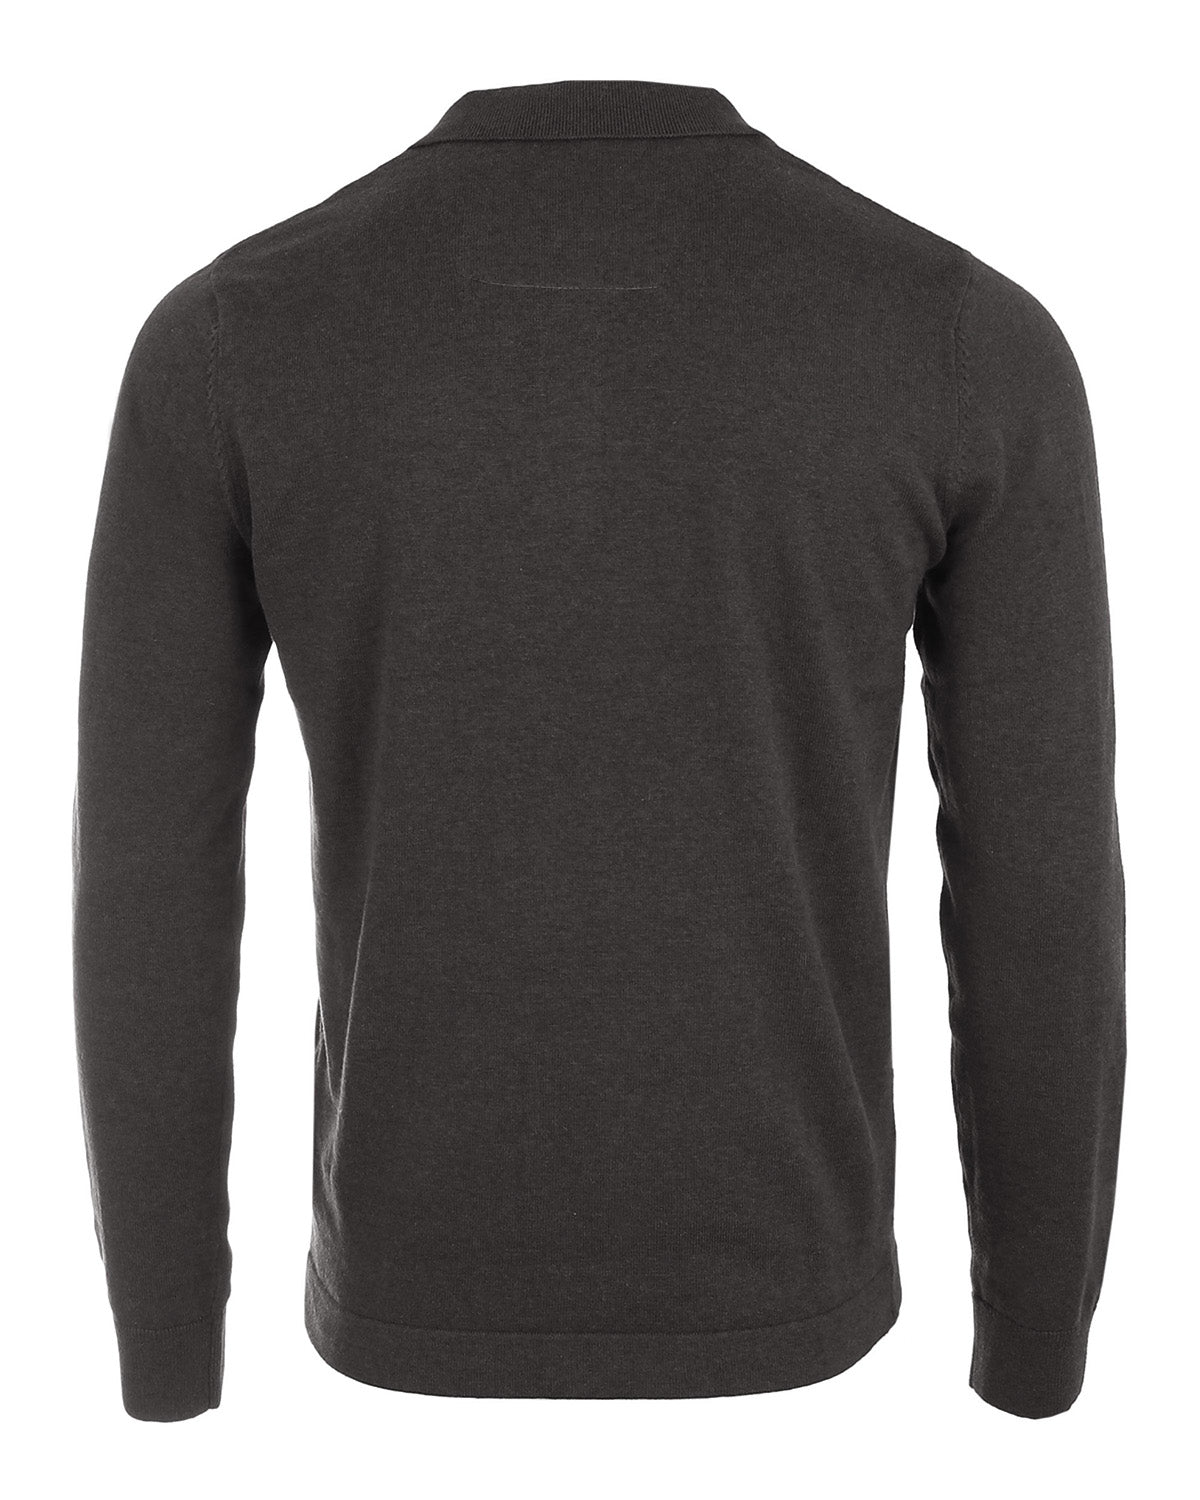 TEEK - Charcoal Mens Casual Polo Sweater - Long Sleeve SWEATER TEEK M   